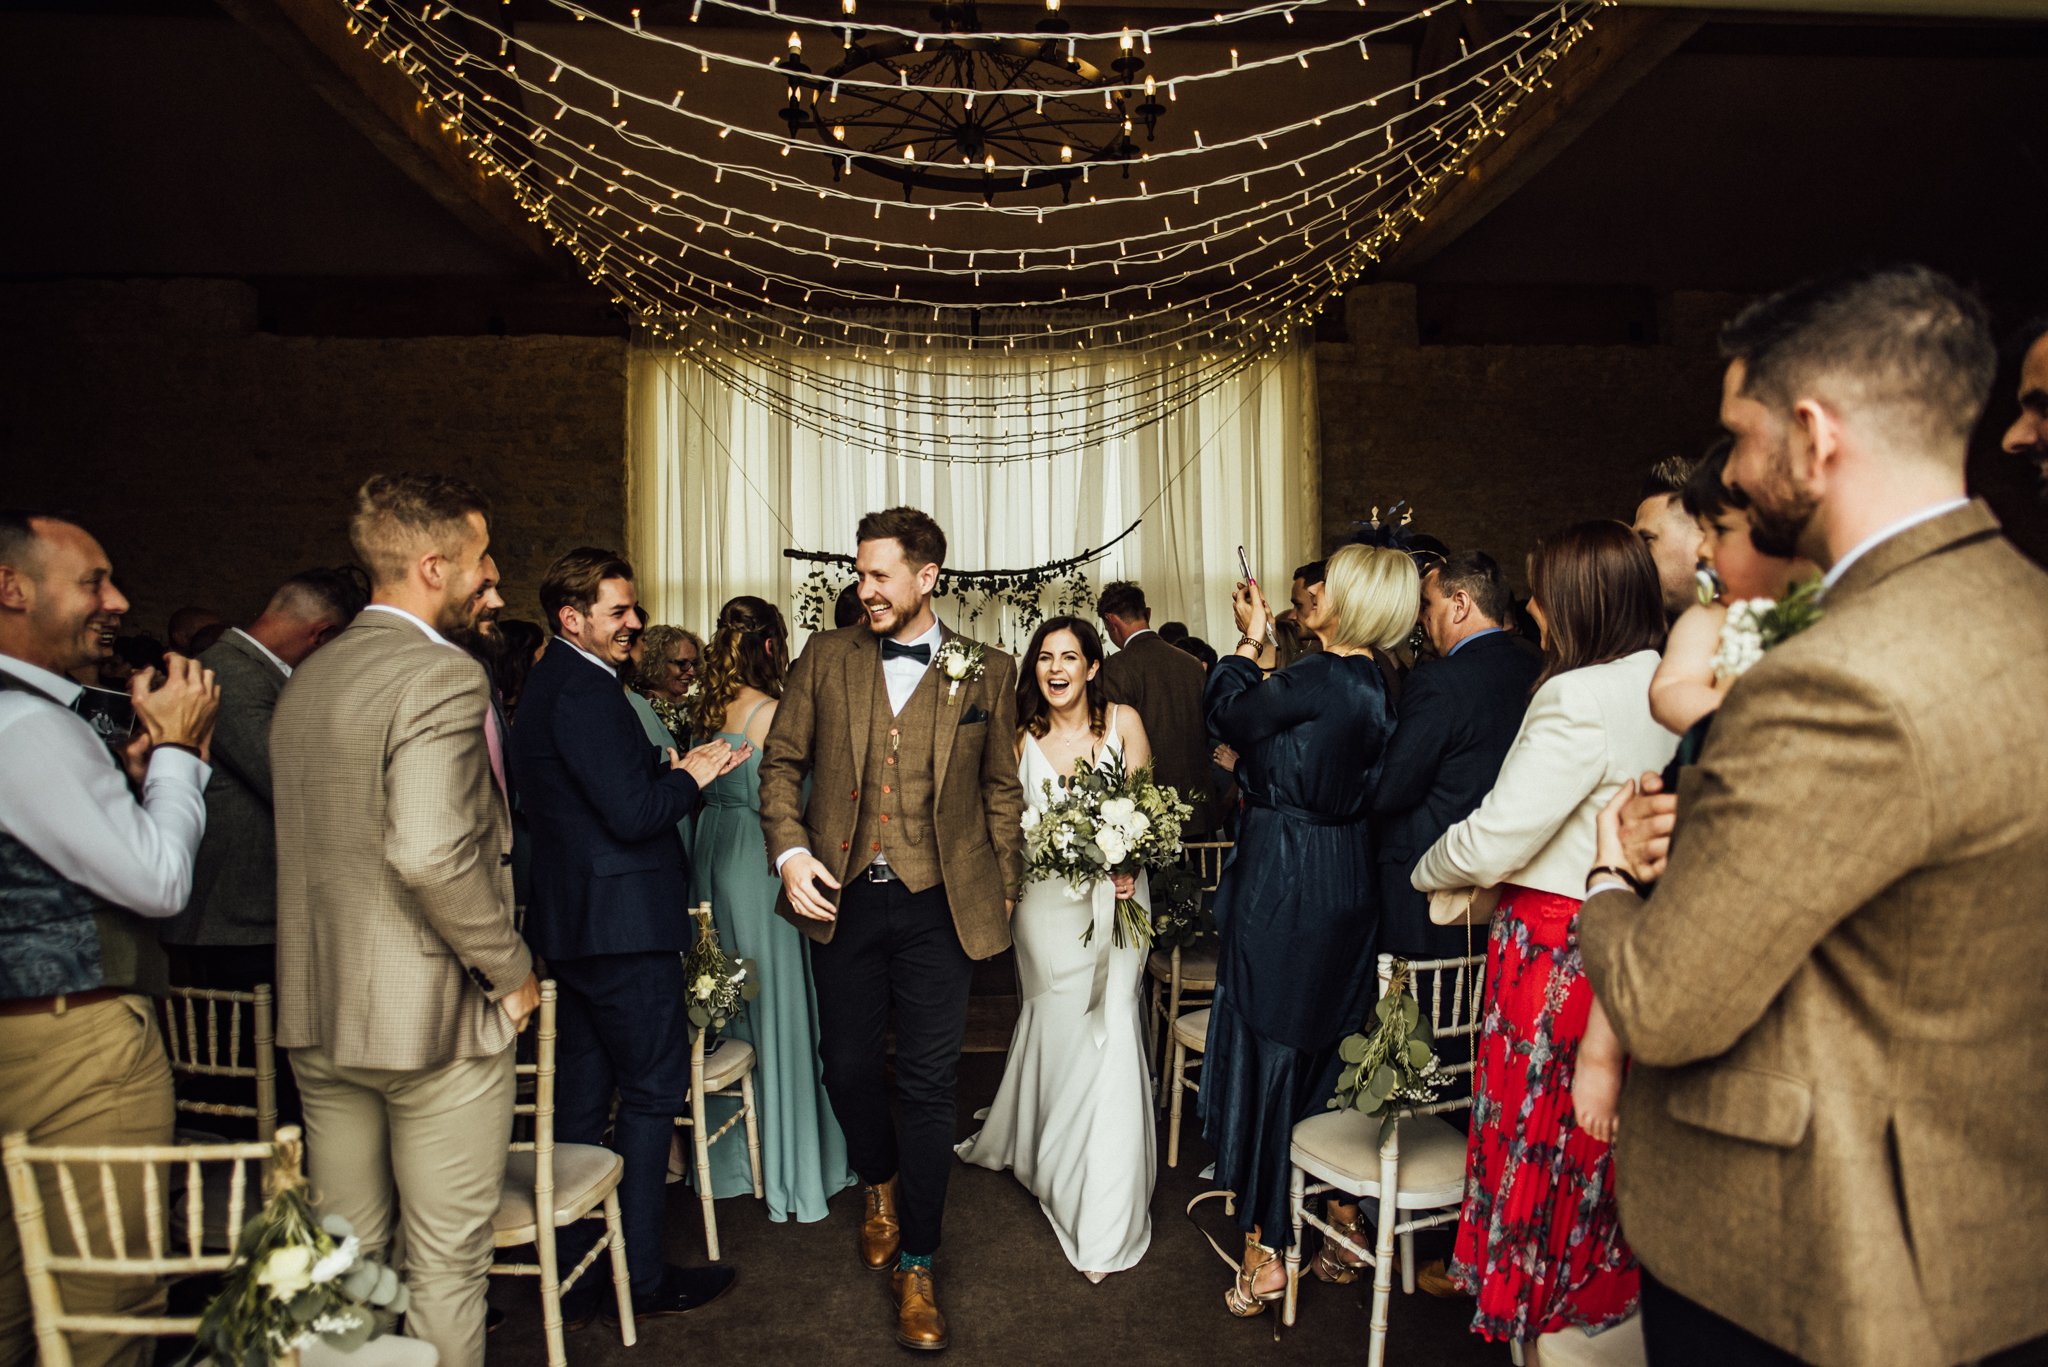 edgy wedding photography, cool wedding photography, editorial wedding photography, michelle wood photographer, stratton court barn wedding